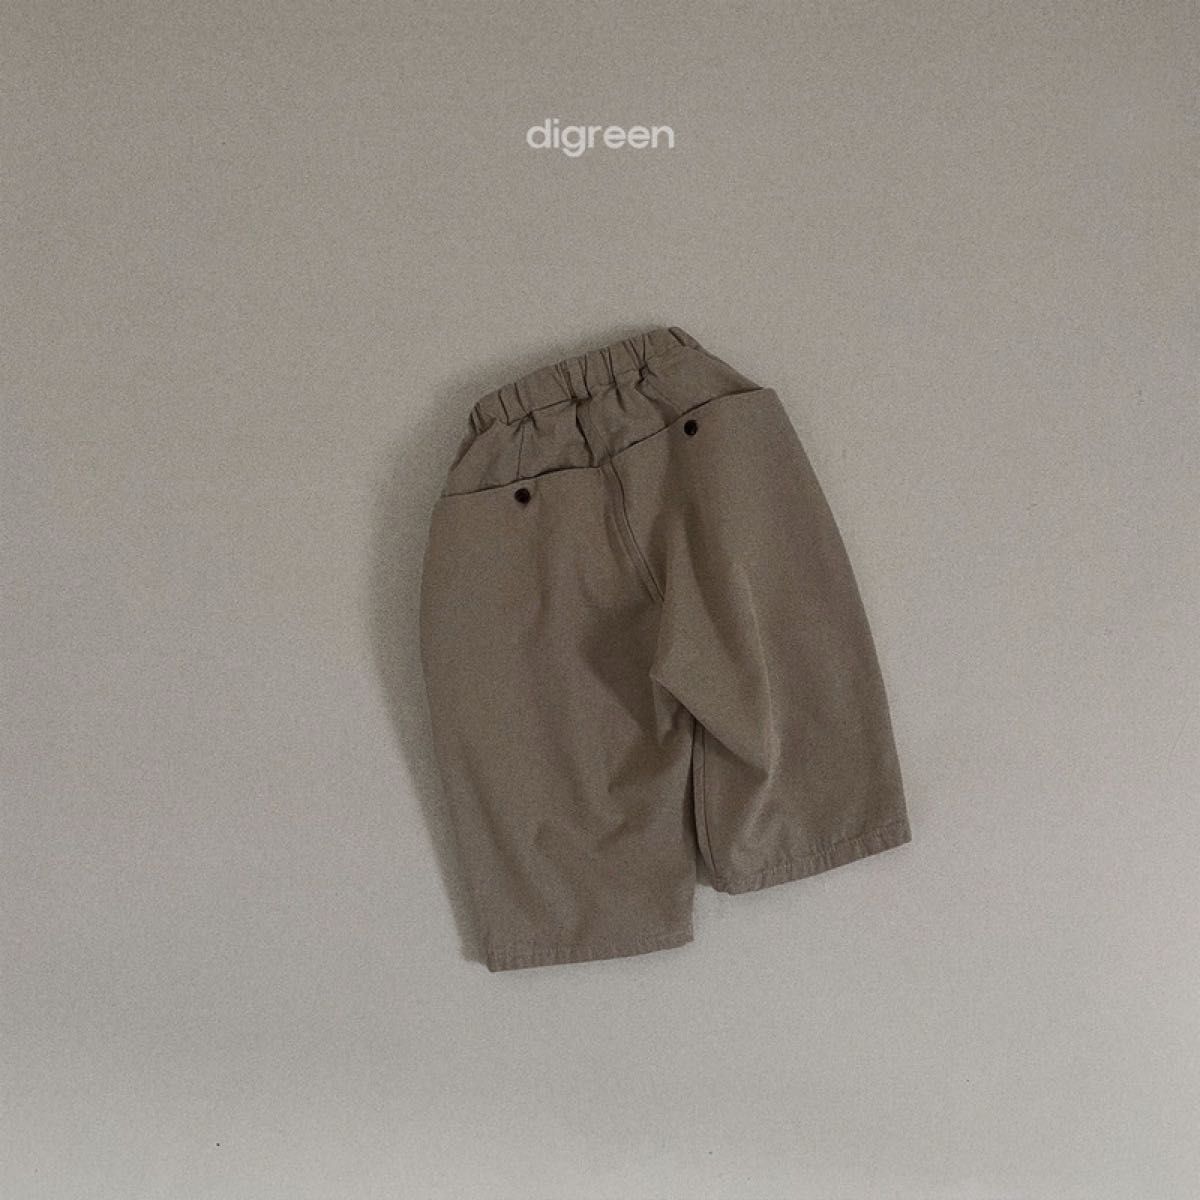 digreen / buzz pants (beige)